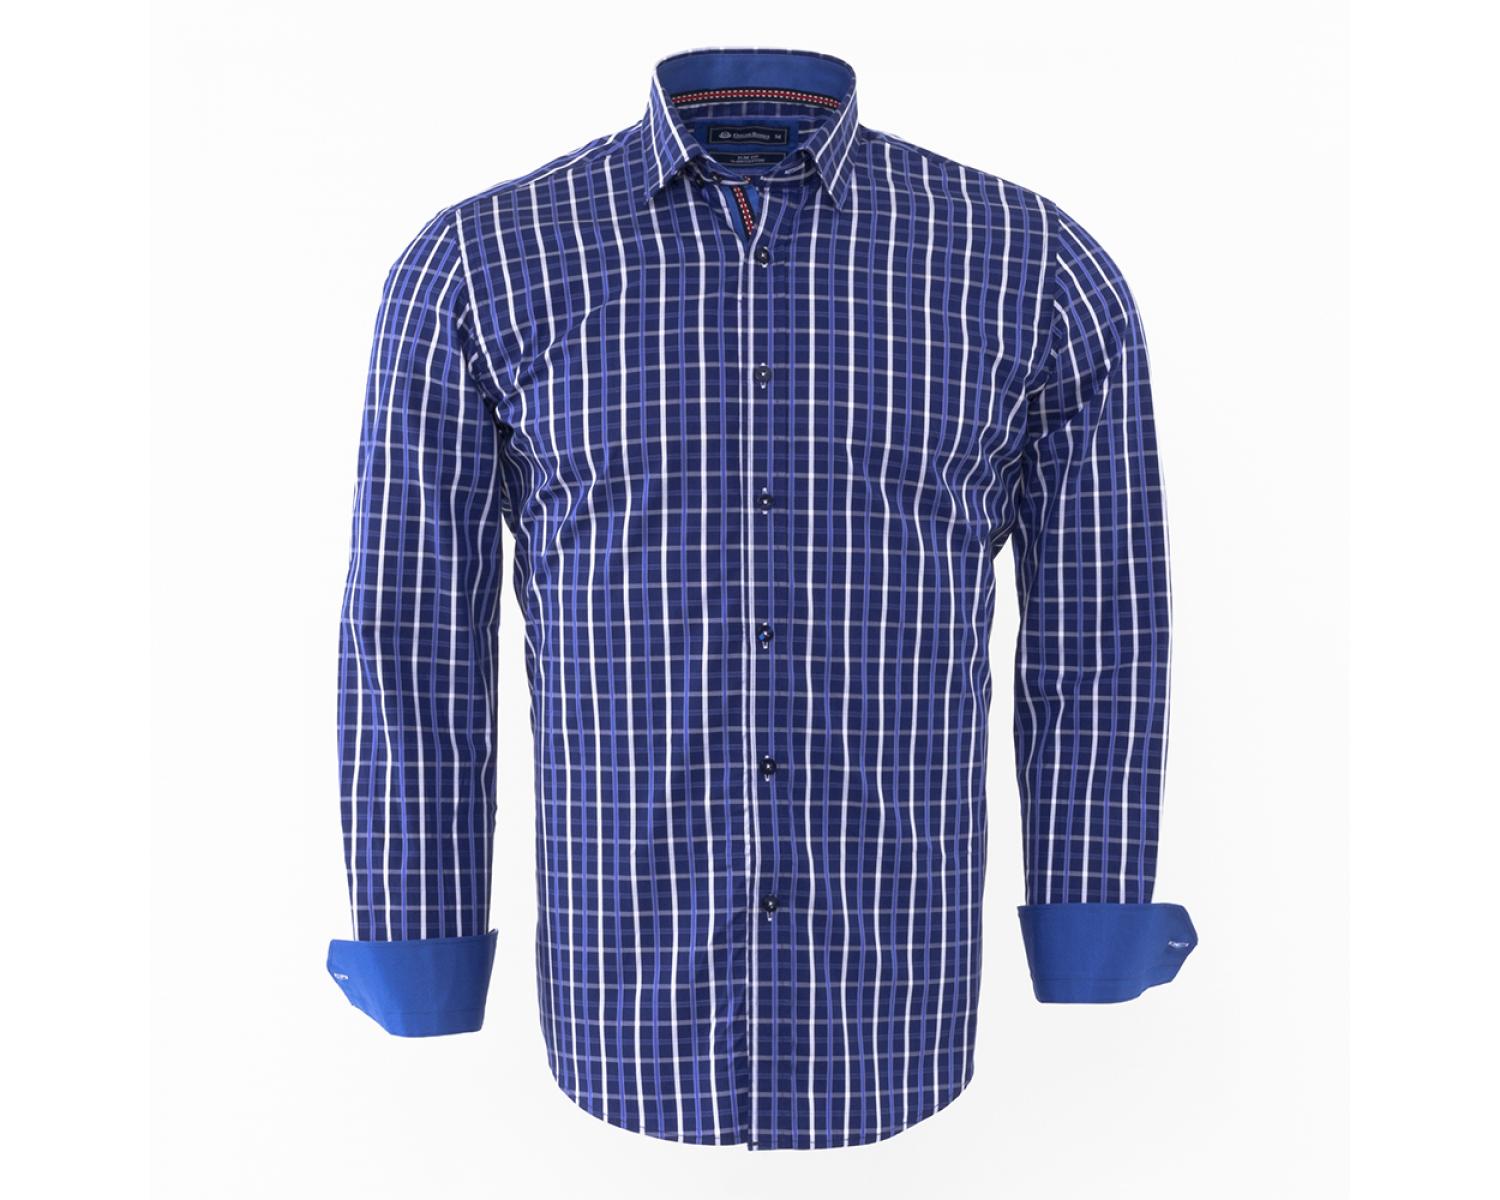 SL 5844 Men's dark blue & white checked shirt - Quality Designed Shirts